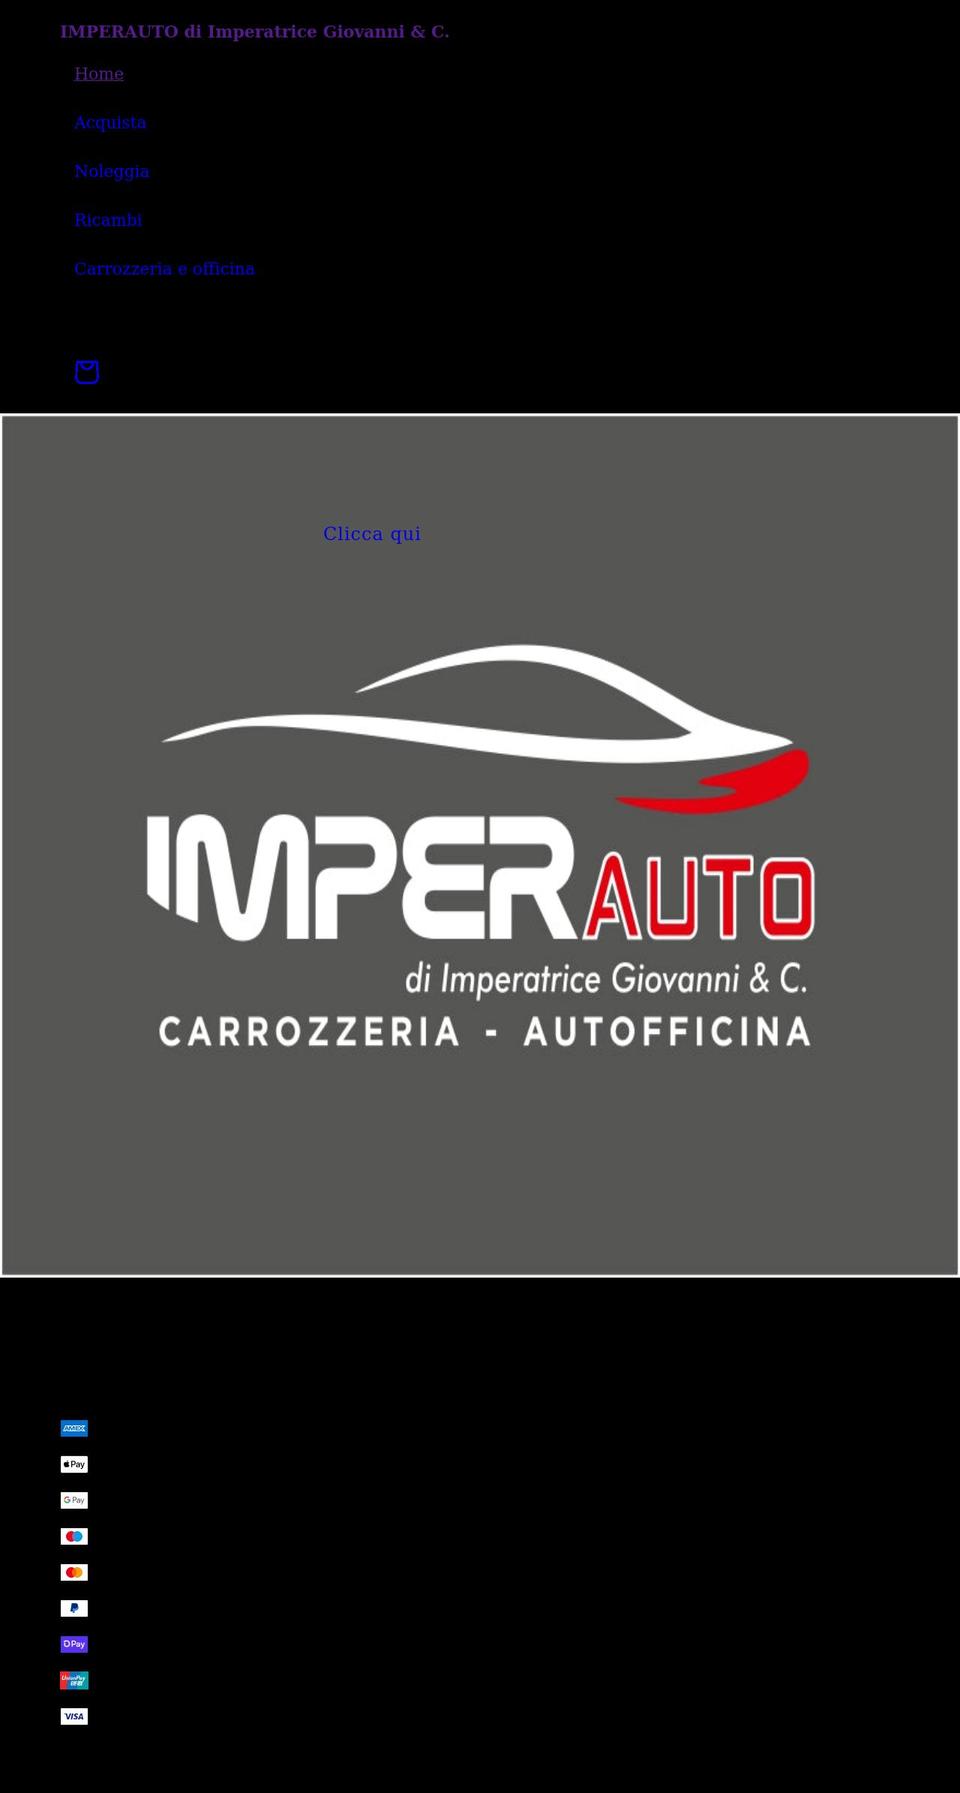 imperauto.it shopify website screenshot